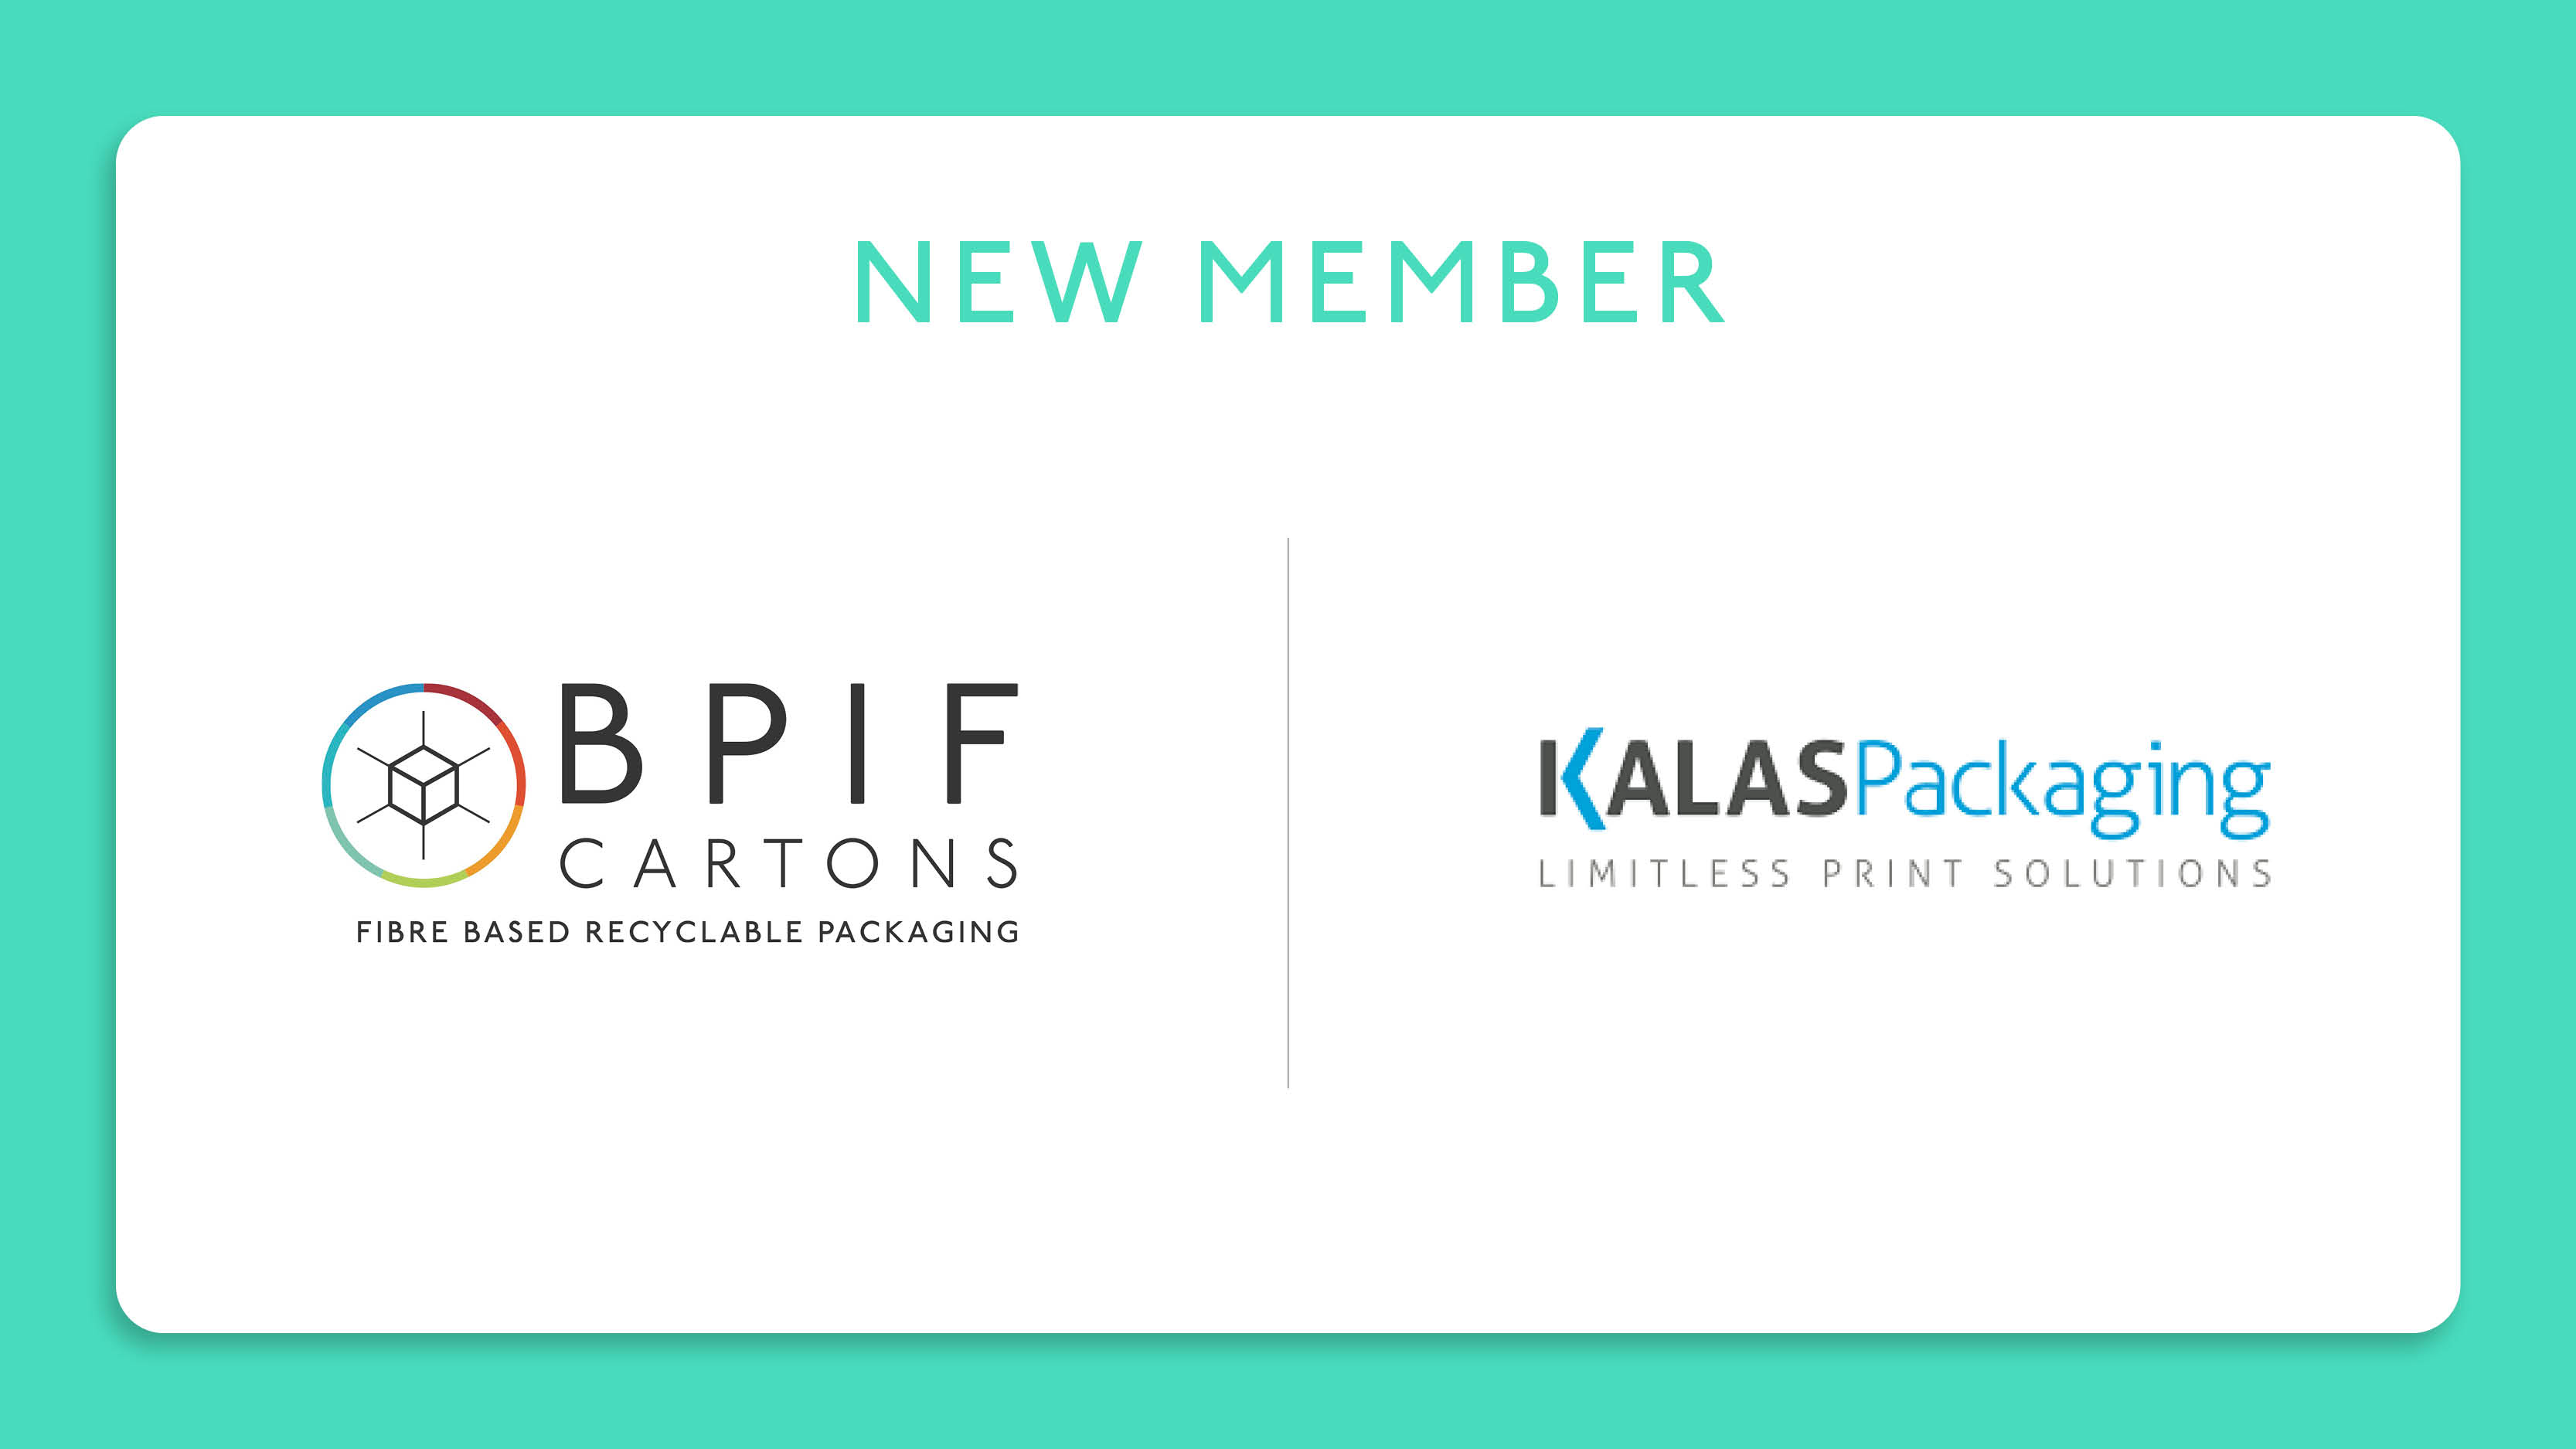 New Member - Kalas Packaging Limited